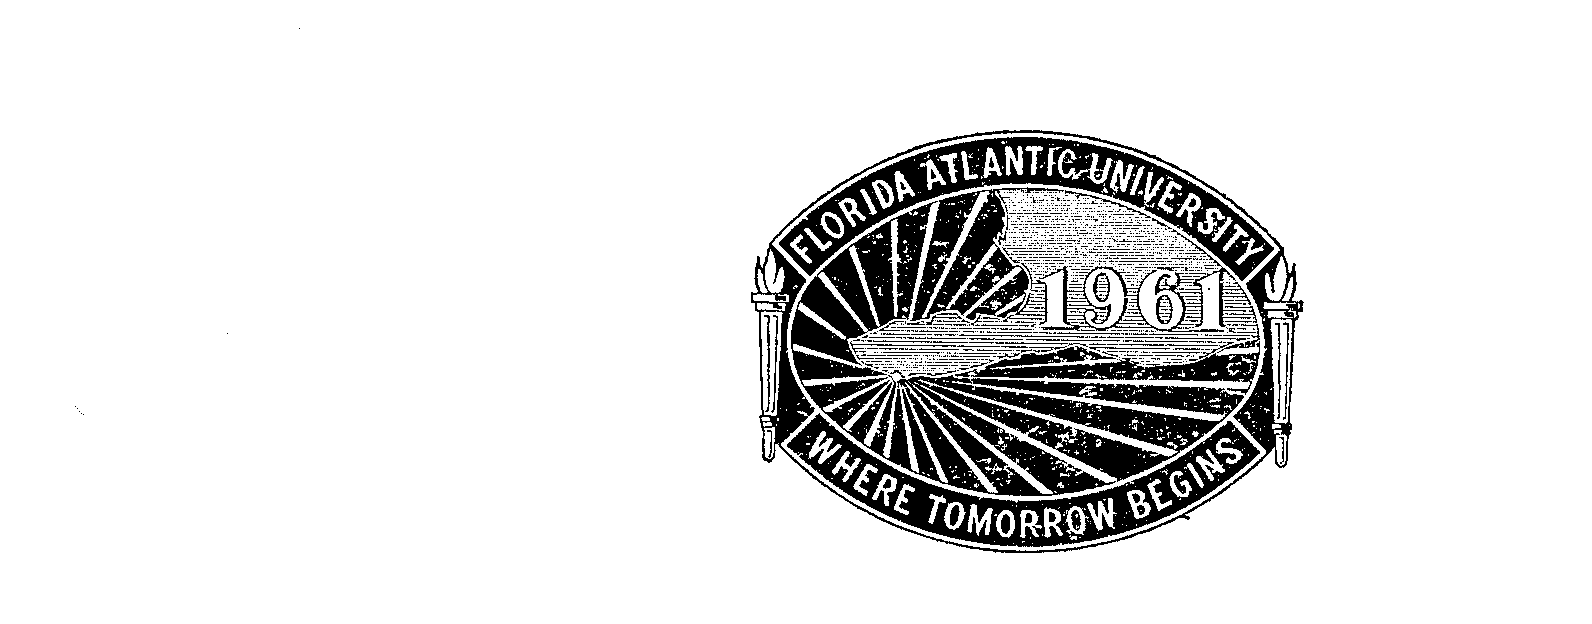  FLORIDA ATLANTIC UNIVERSITY 1961 WHERE TOMORROW BEGINS